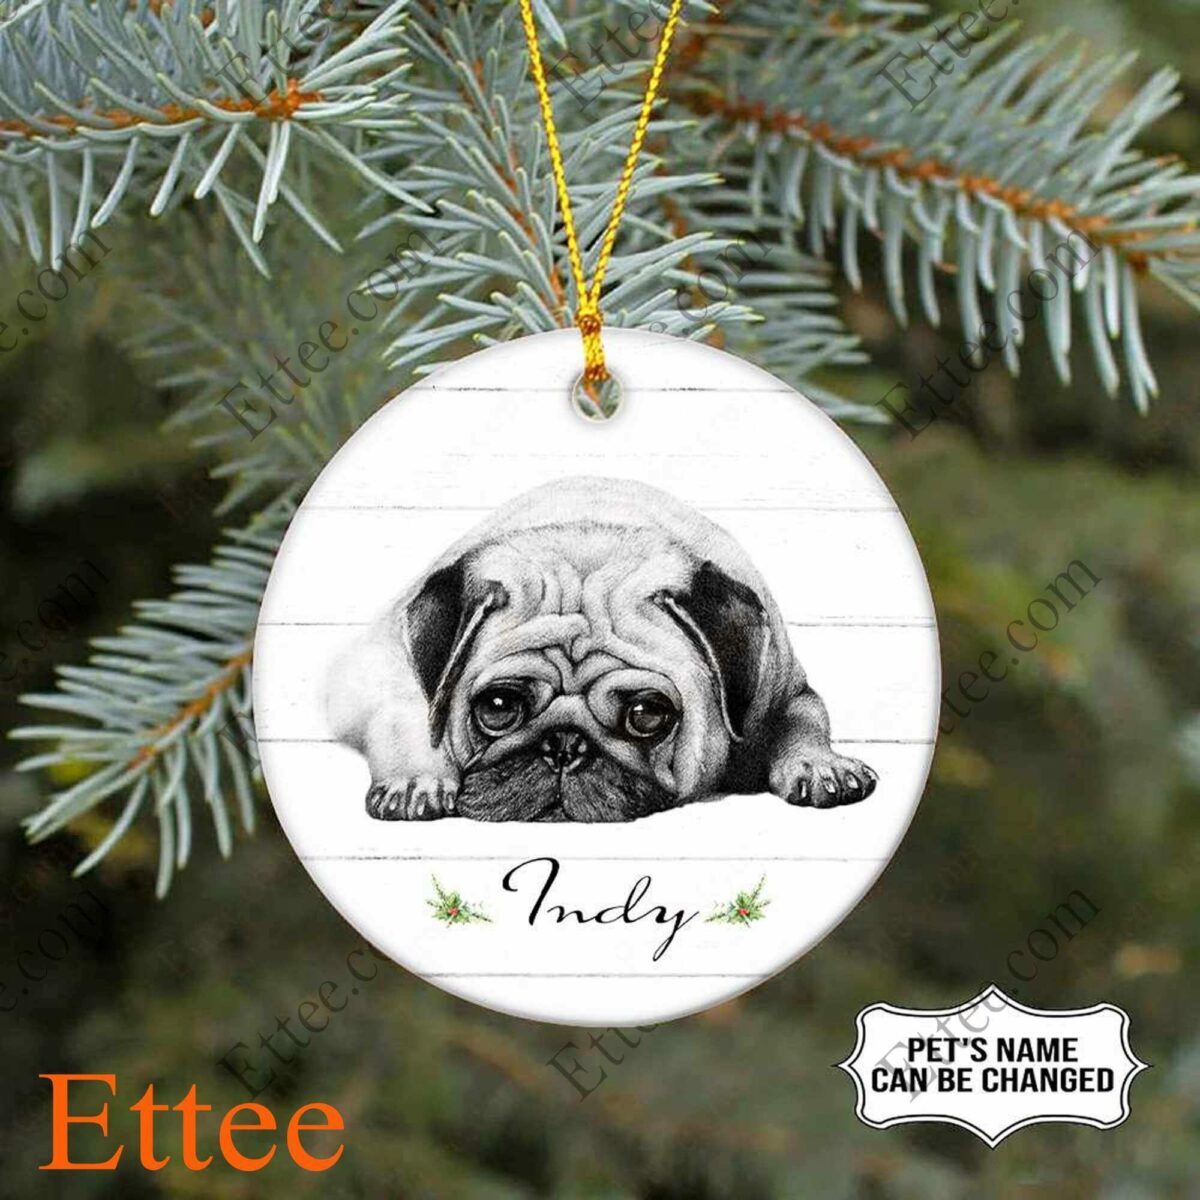 Lying Pug Ceramic Ornament, Unique Custom Name Gift For Dog Lovers - Ettee - Ceramic ornament